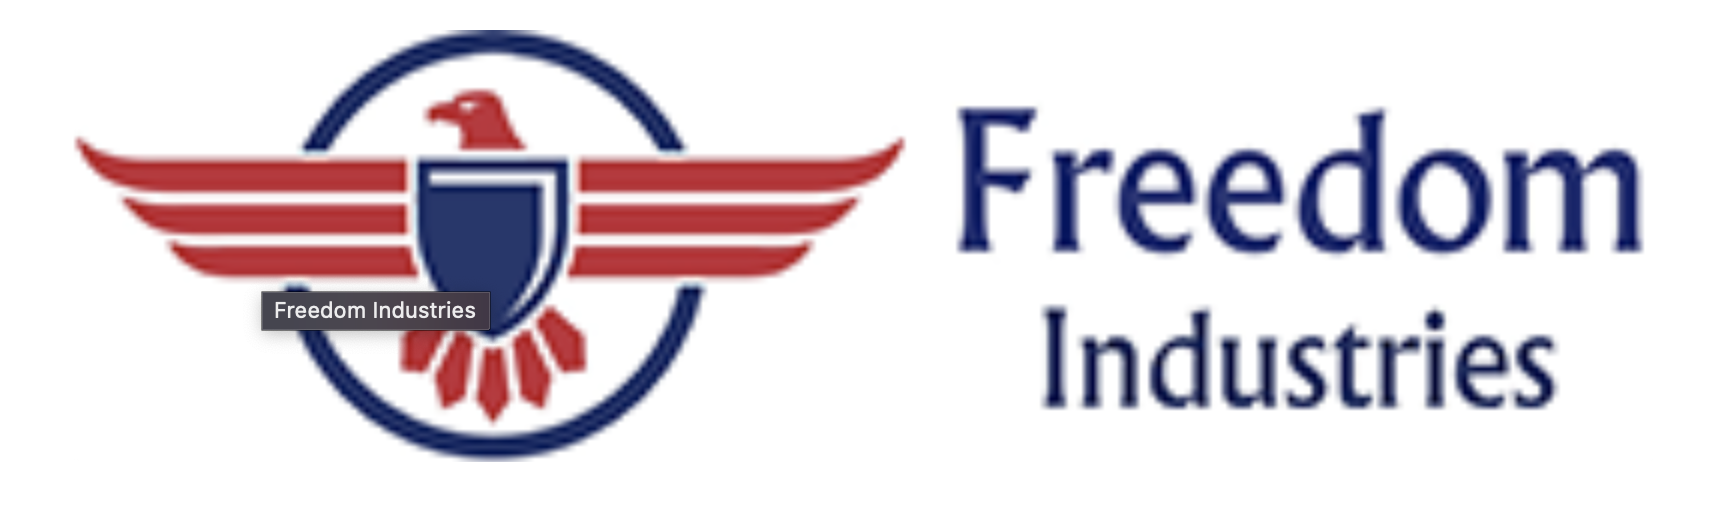 Freedom industries logo